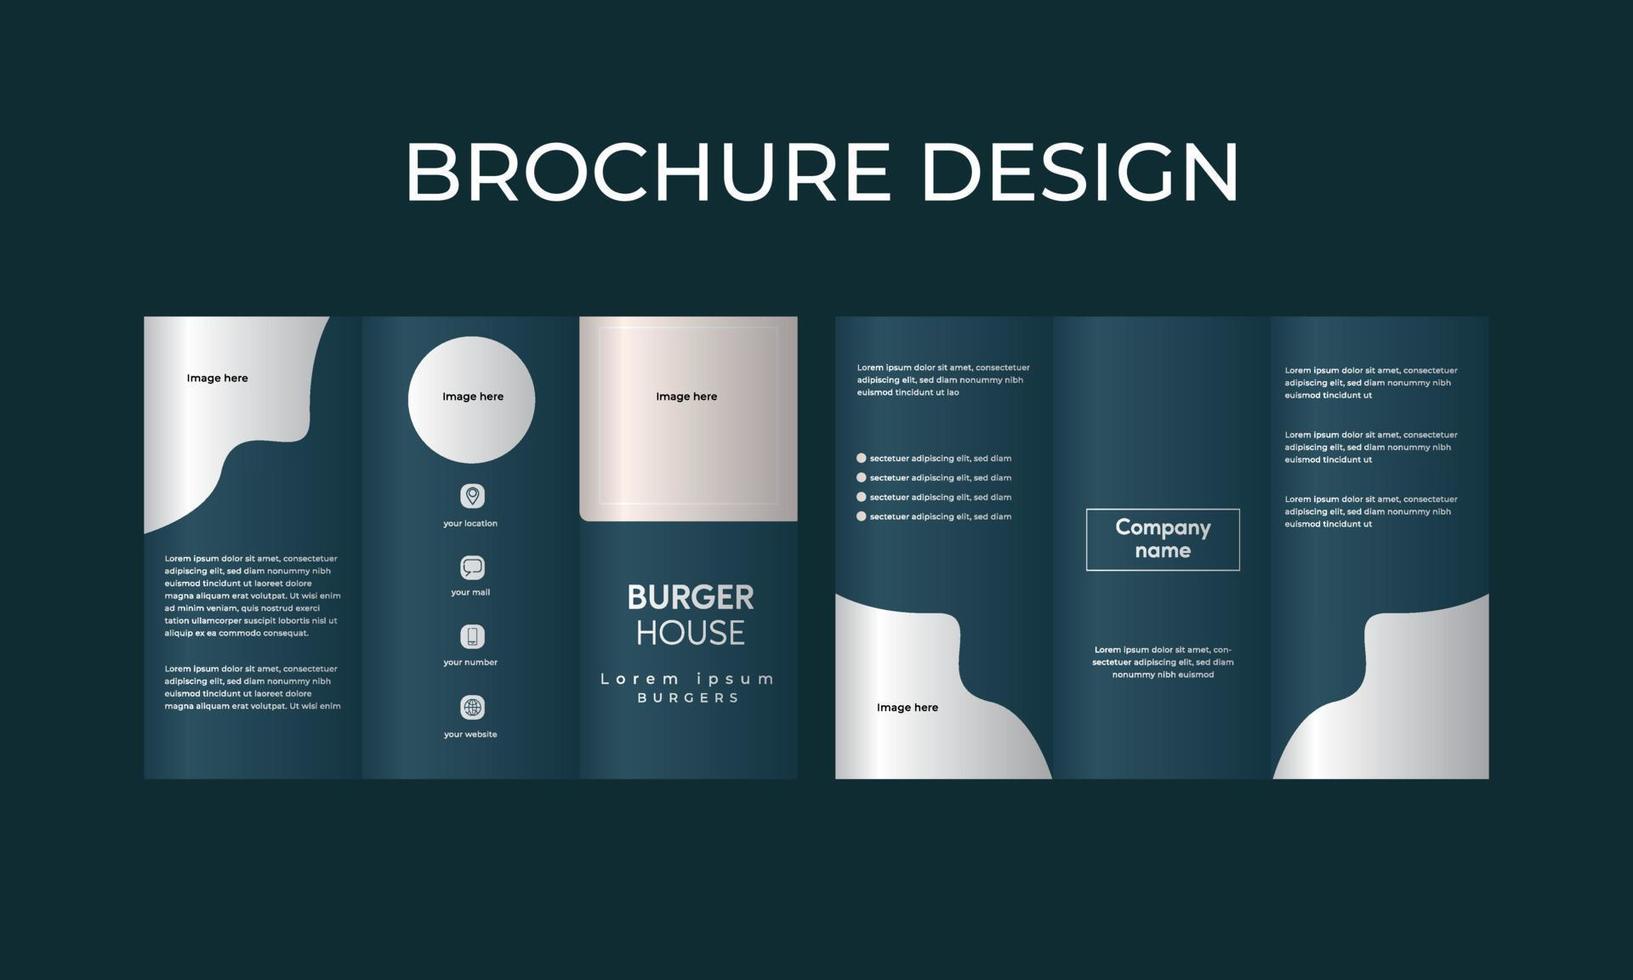 imprimir download de design de brochura criativa e corporativa vetor